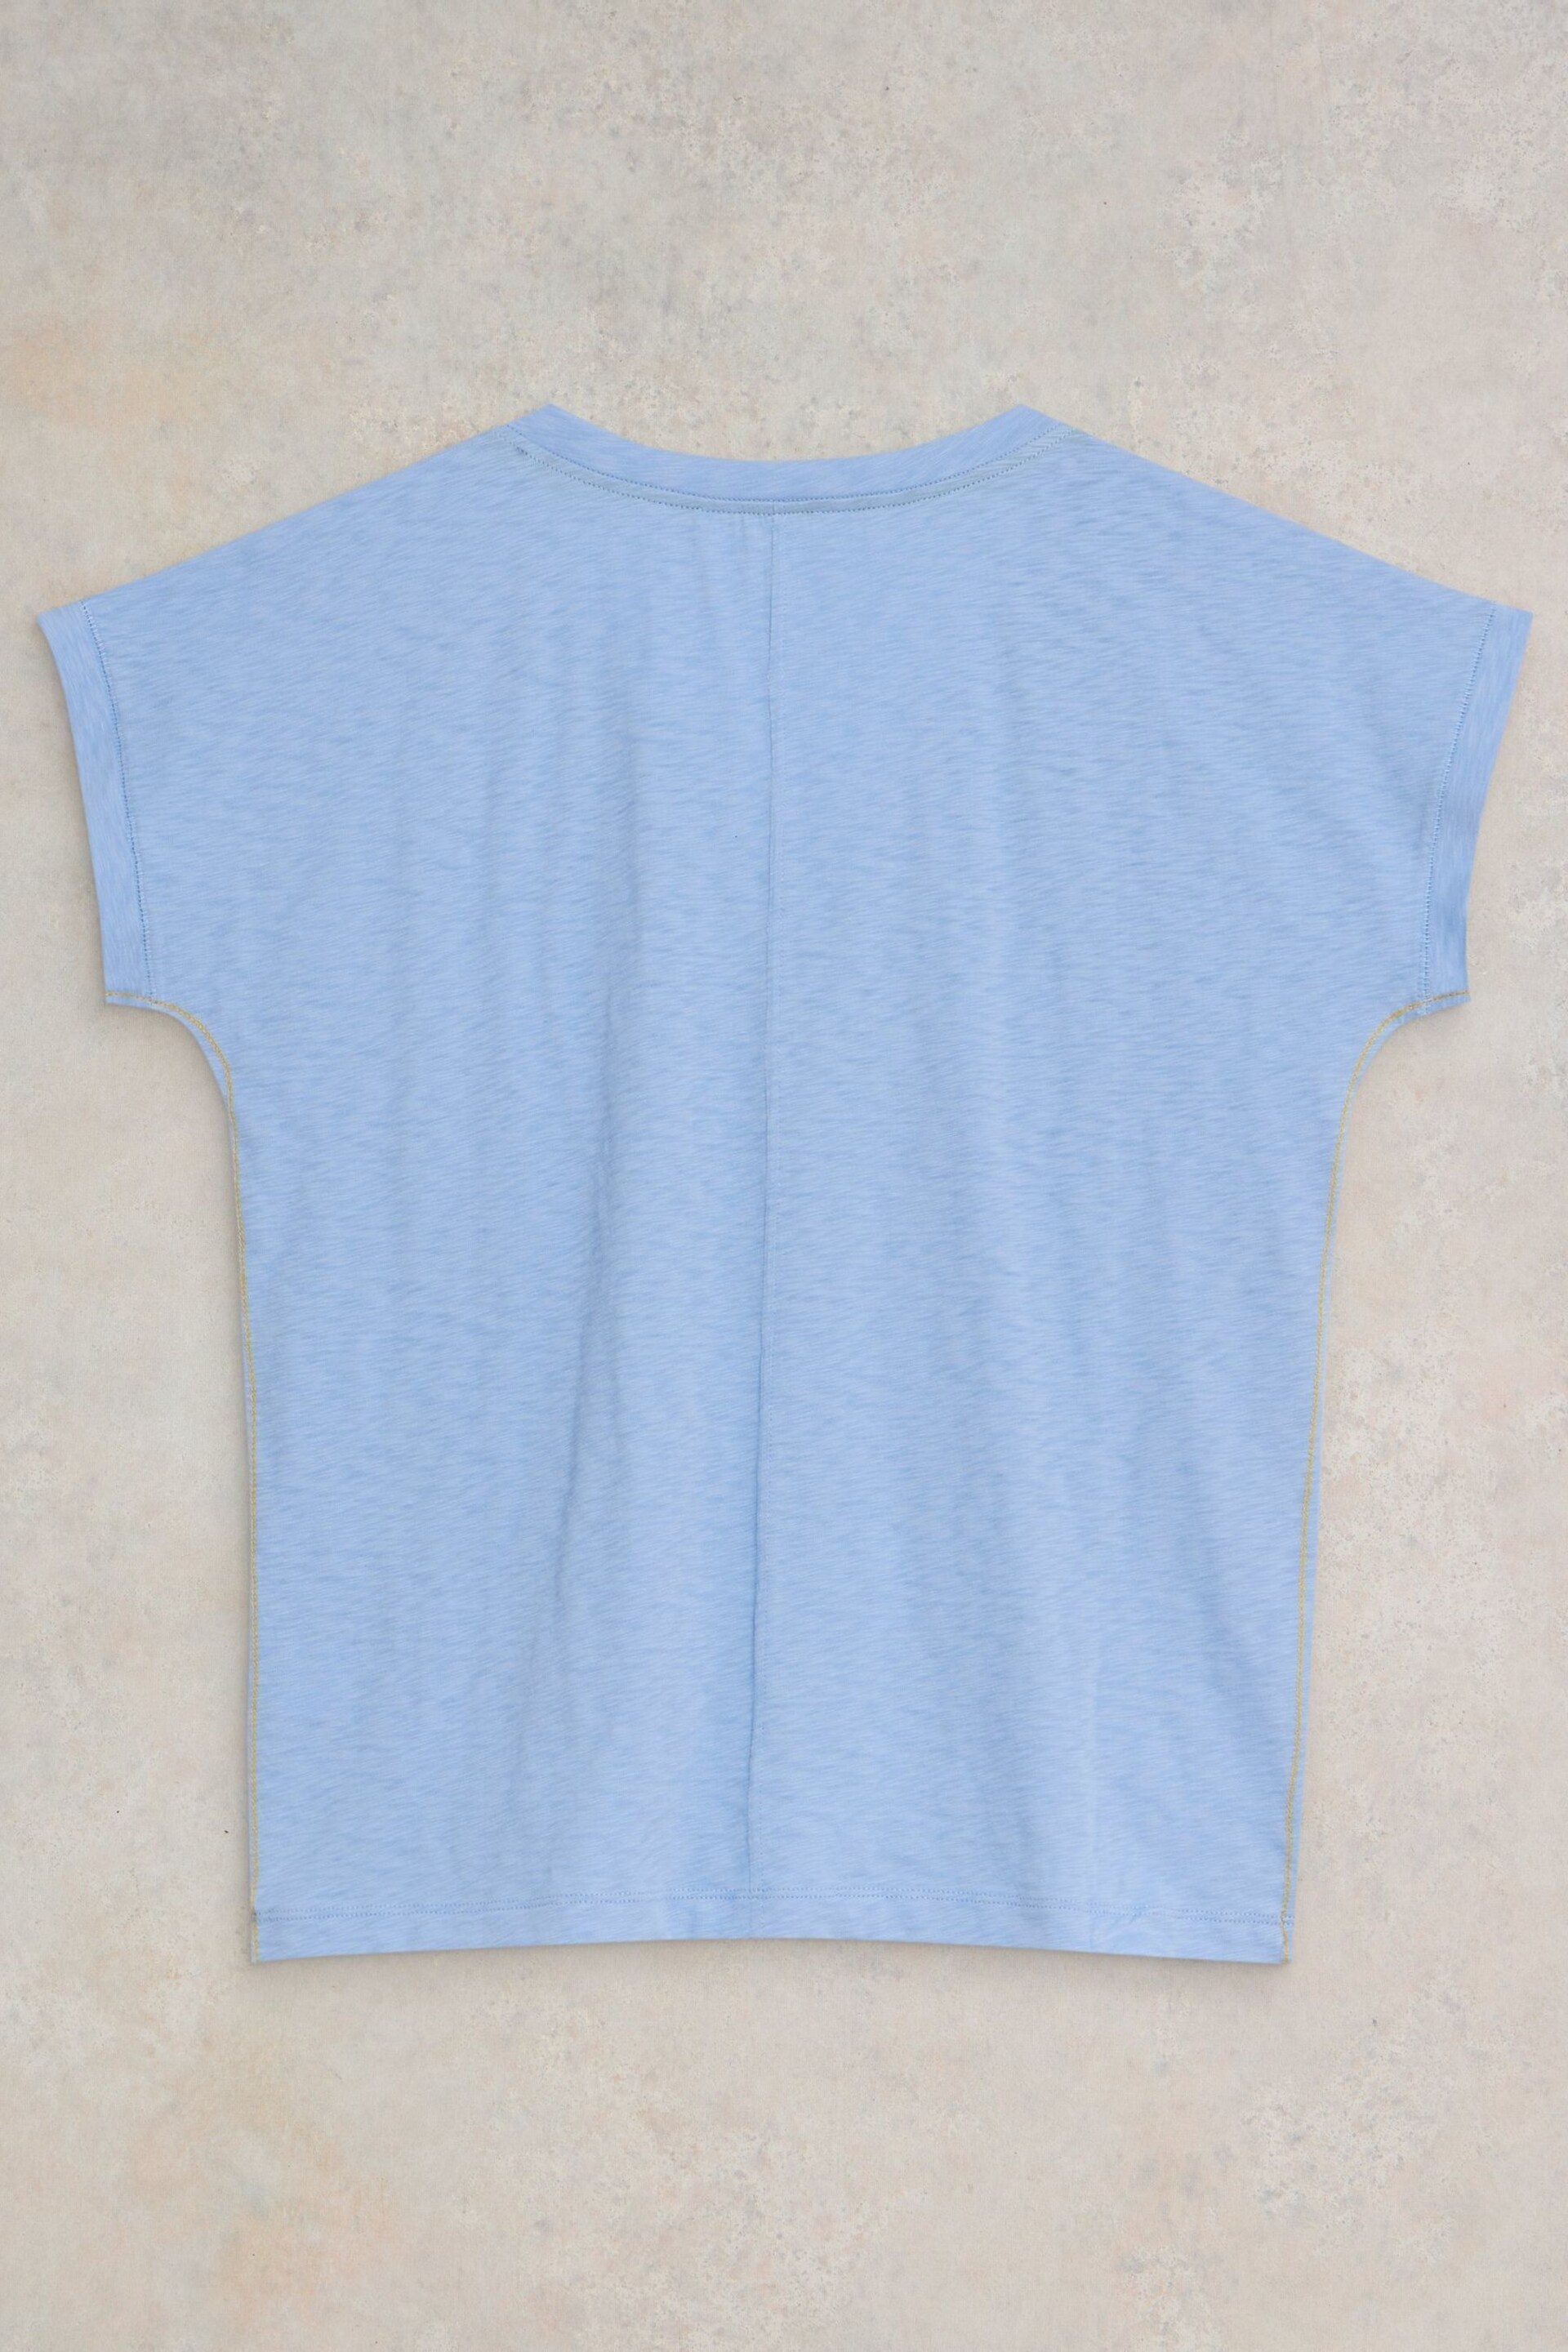 White Stuff Blue Notch Neck Nelly T-Shirt - Image 6 of 7